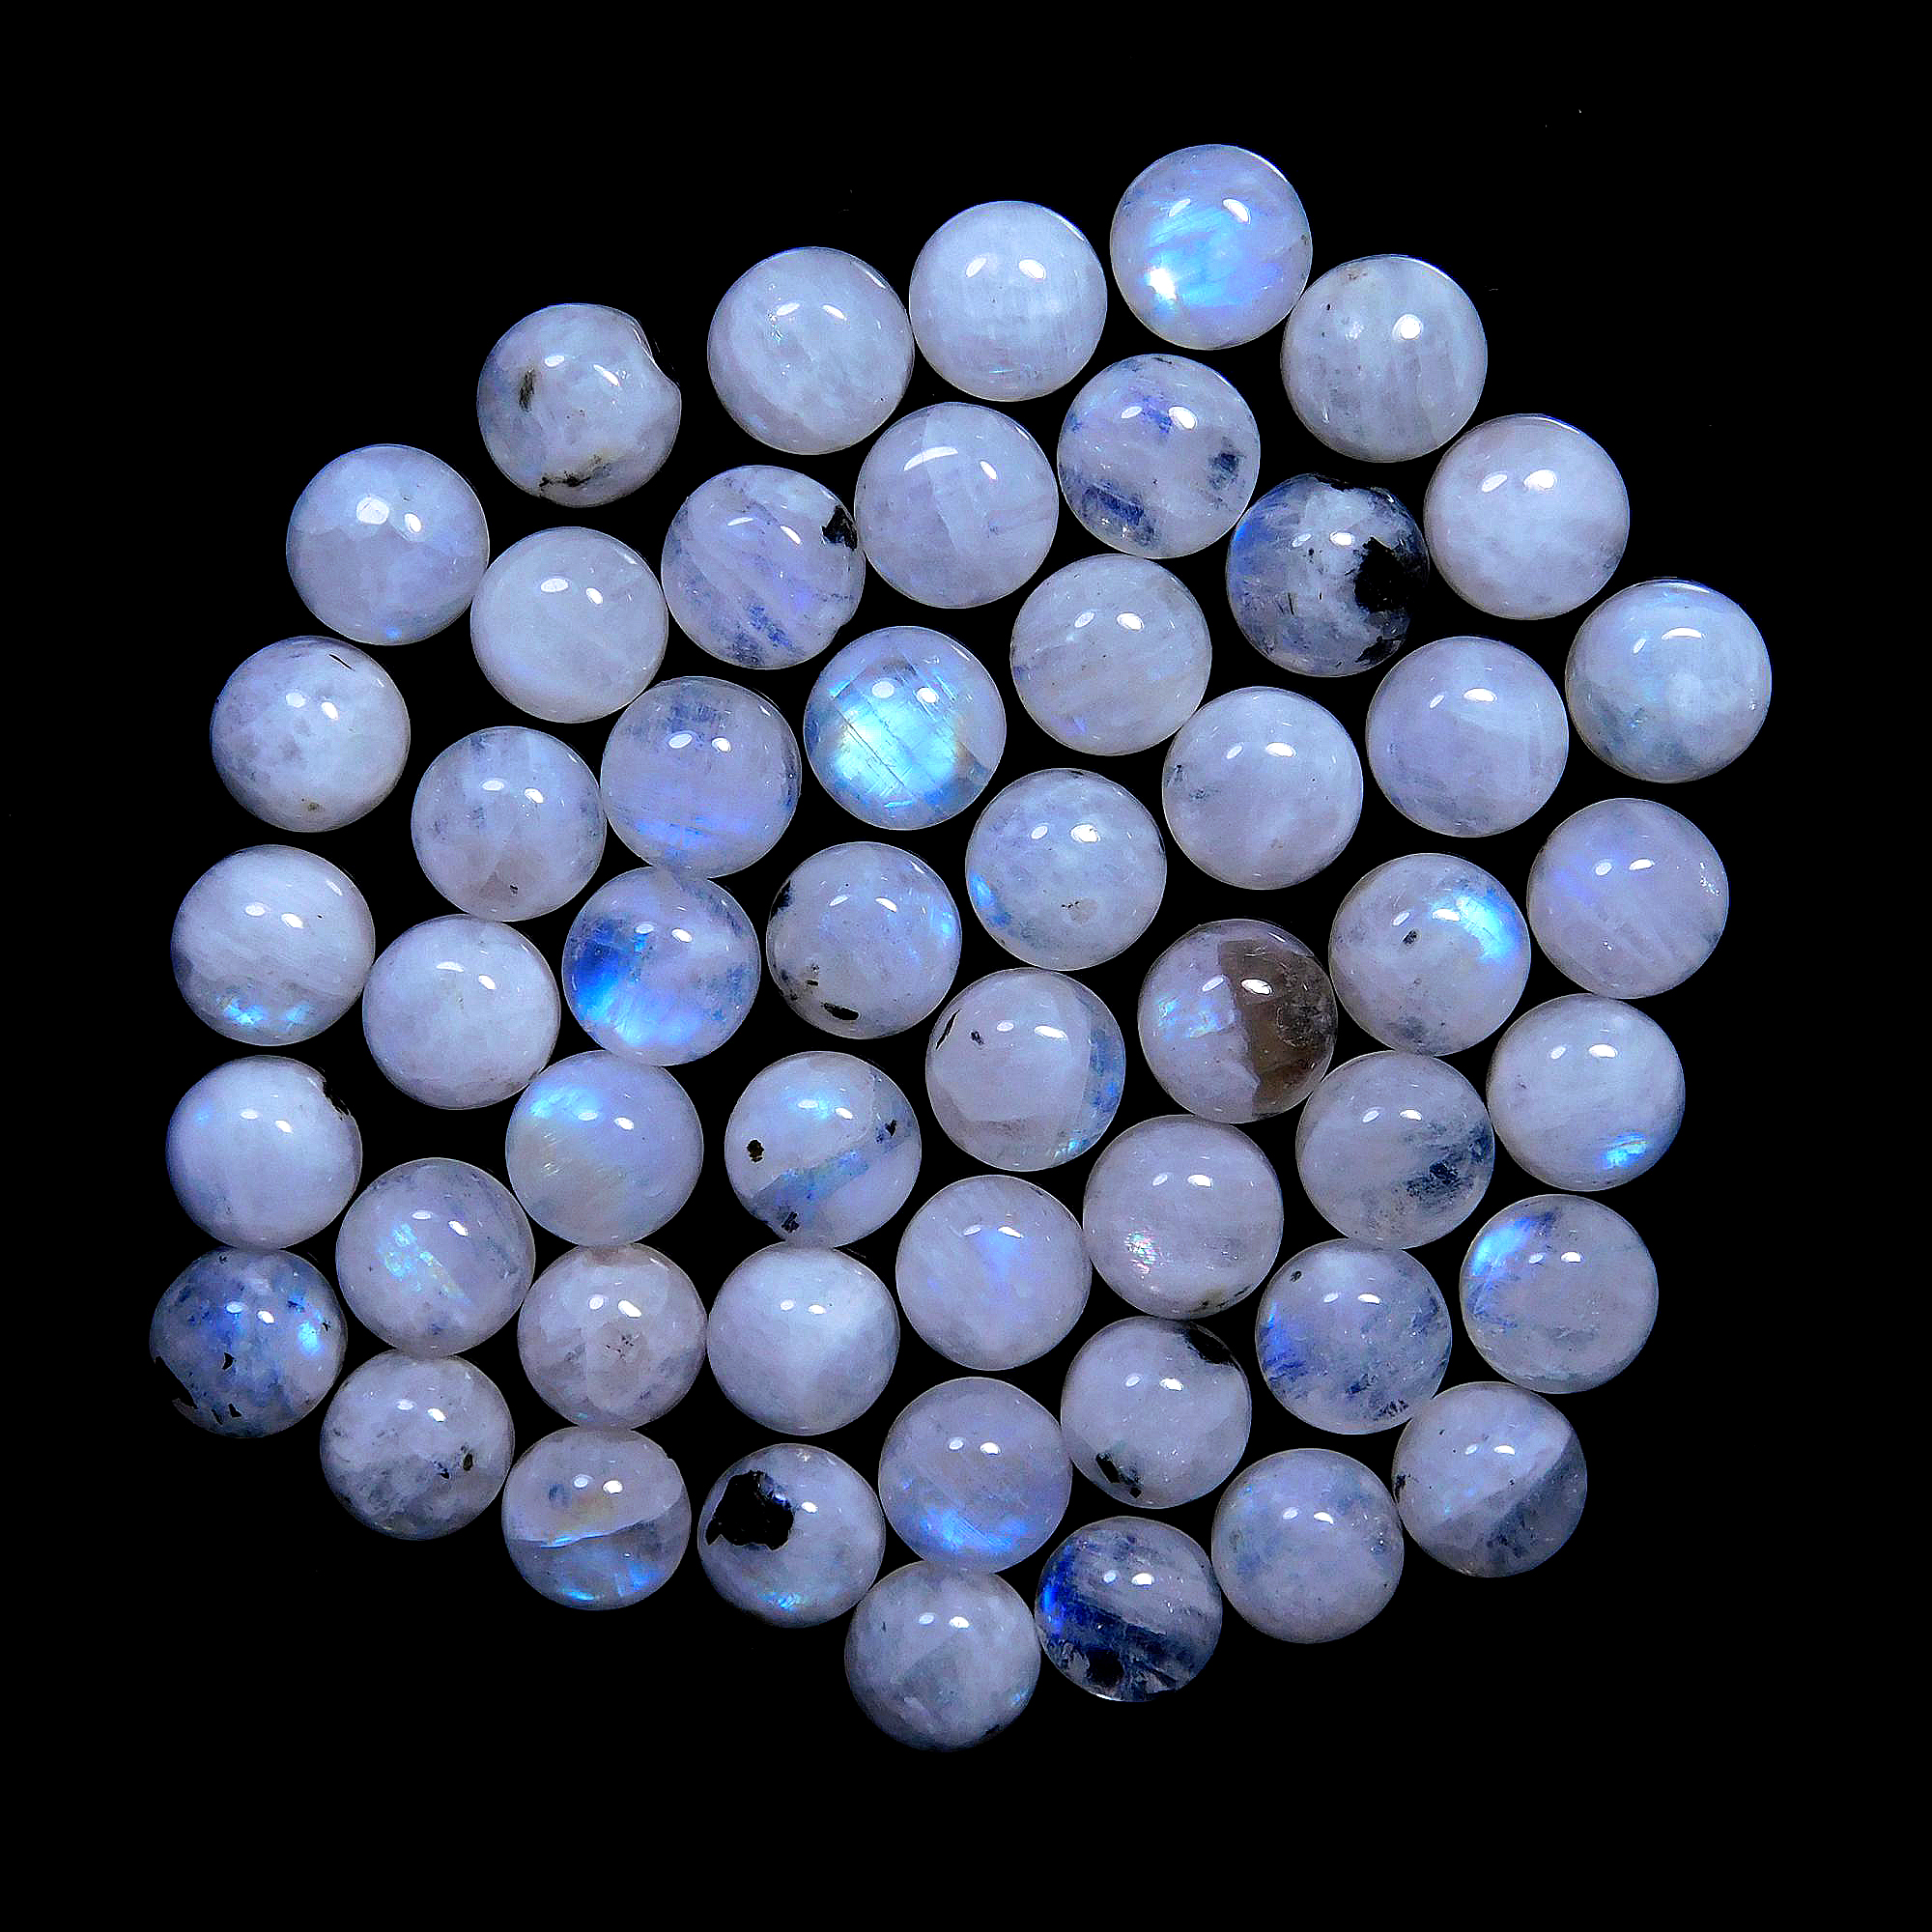 51 Pcs.219Cts. Natural Rainbow Moonstone calibrated Round Cabochon Loose Gemstone Wholesale Lot Size 10mm